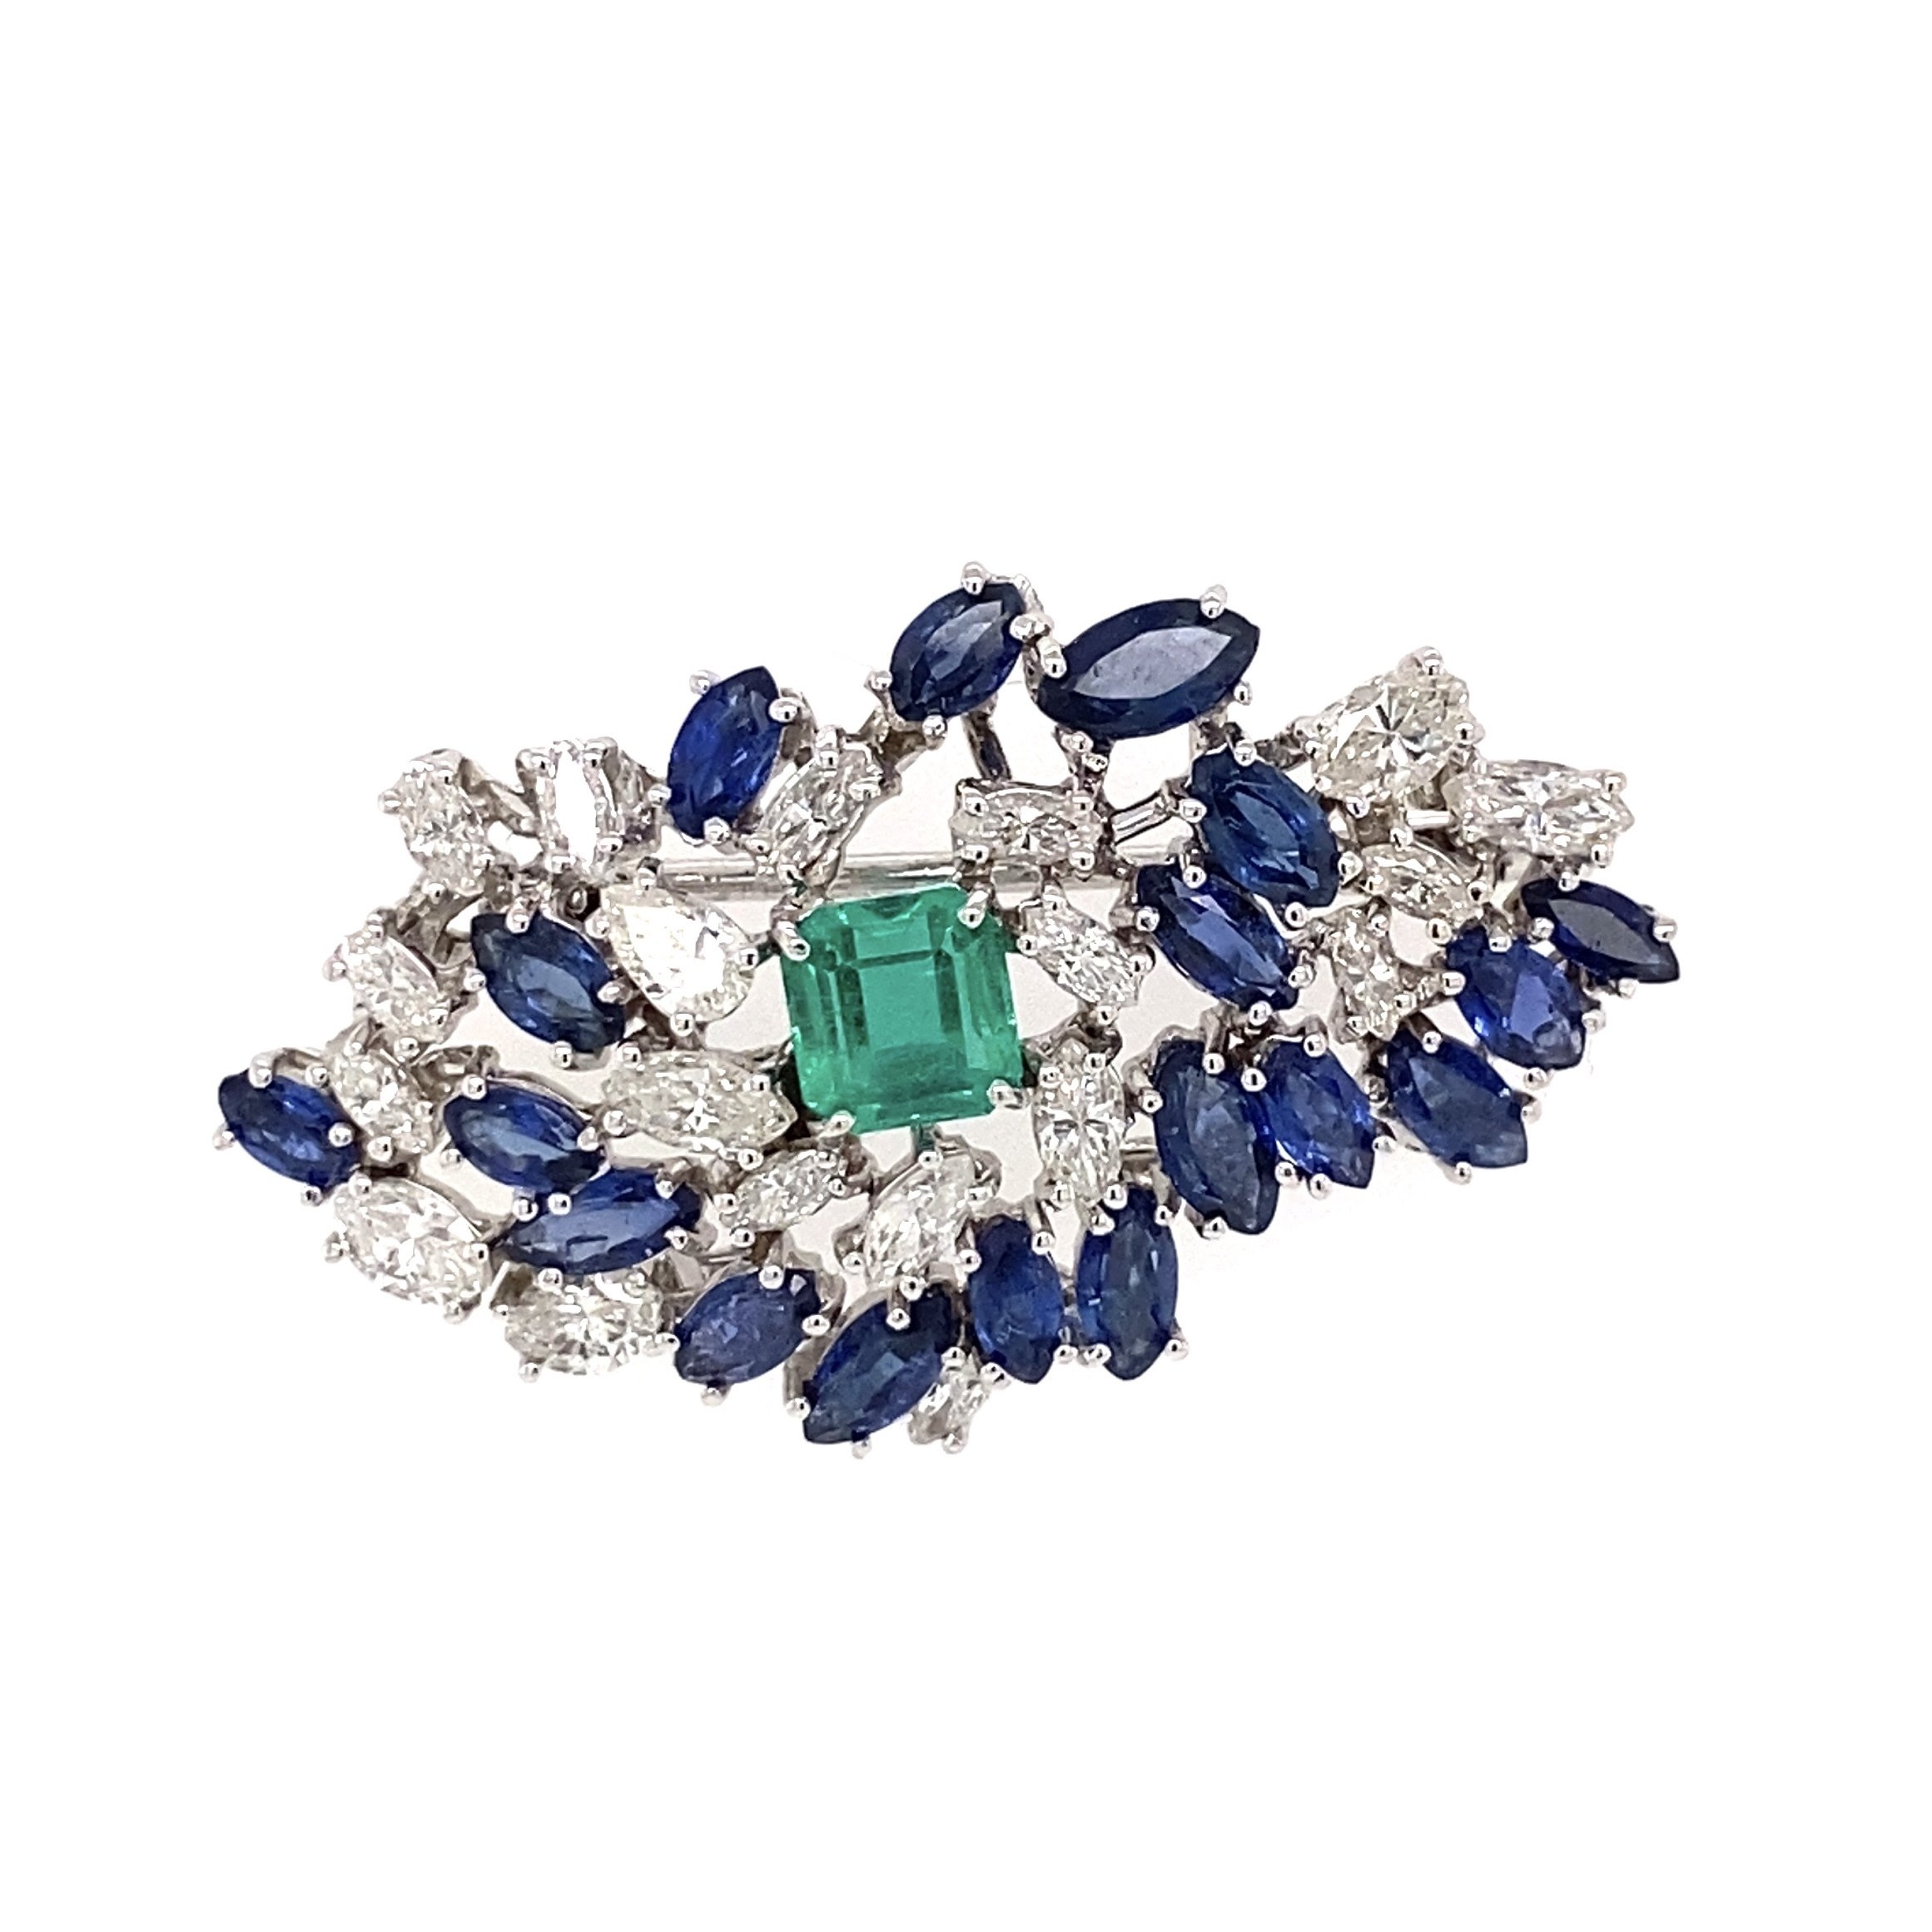 18K WG .66ct Emerald and 3.32tcw Diamond & Sapphire Brooch 7.6g, 1.4"